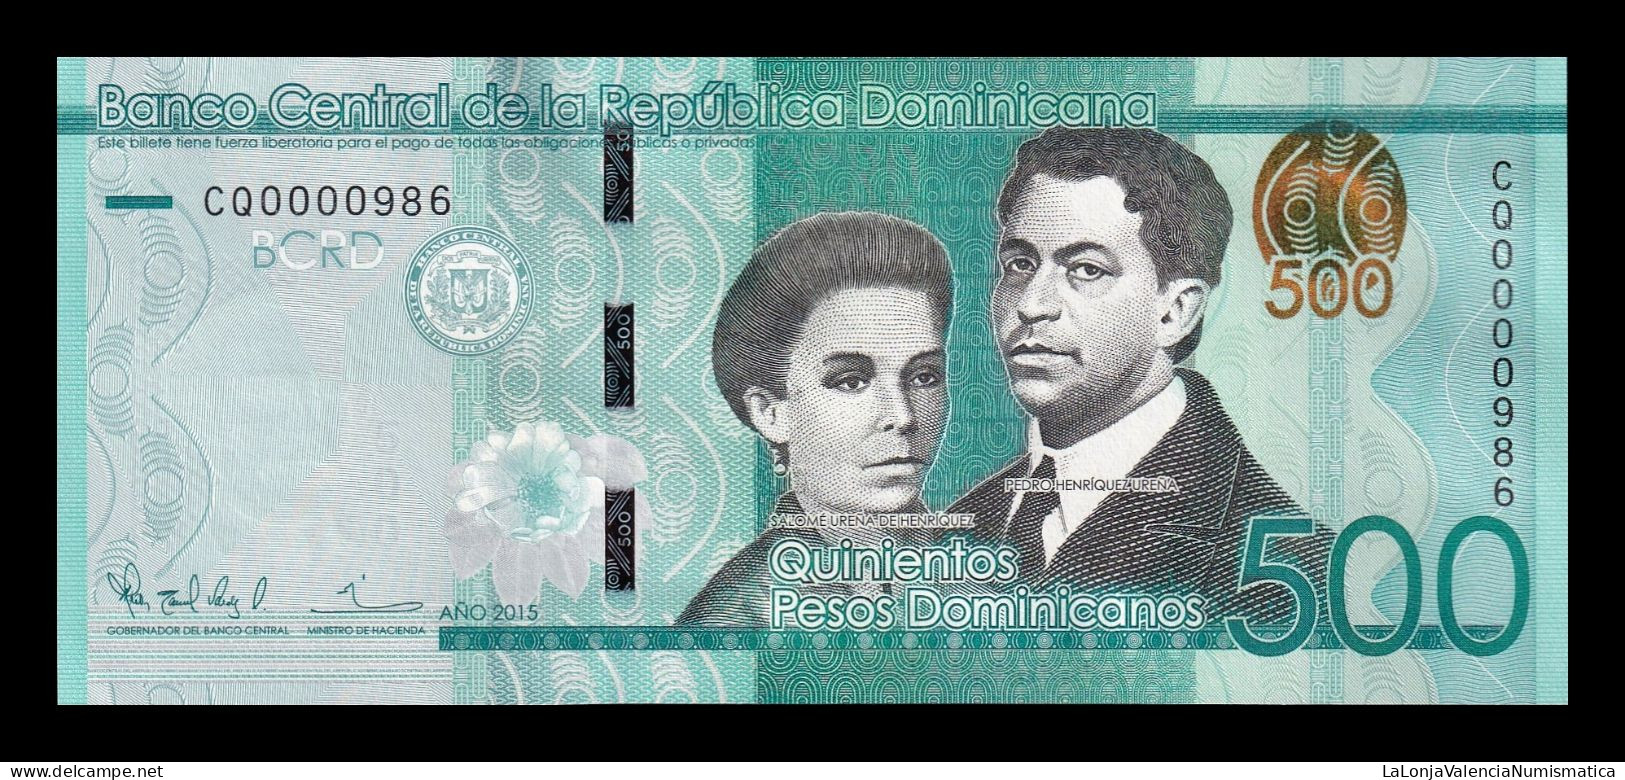 República Dominicana 500 Pesos Dominicanos 2015 Pick 192b Low Serial 986 Sc Unc - República Dominicana